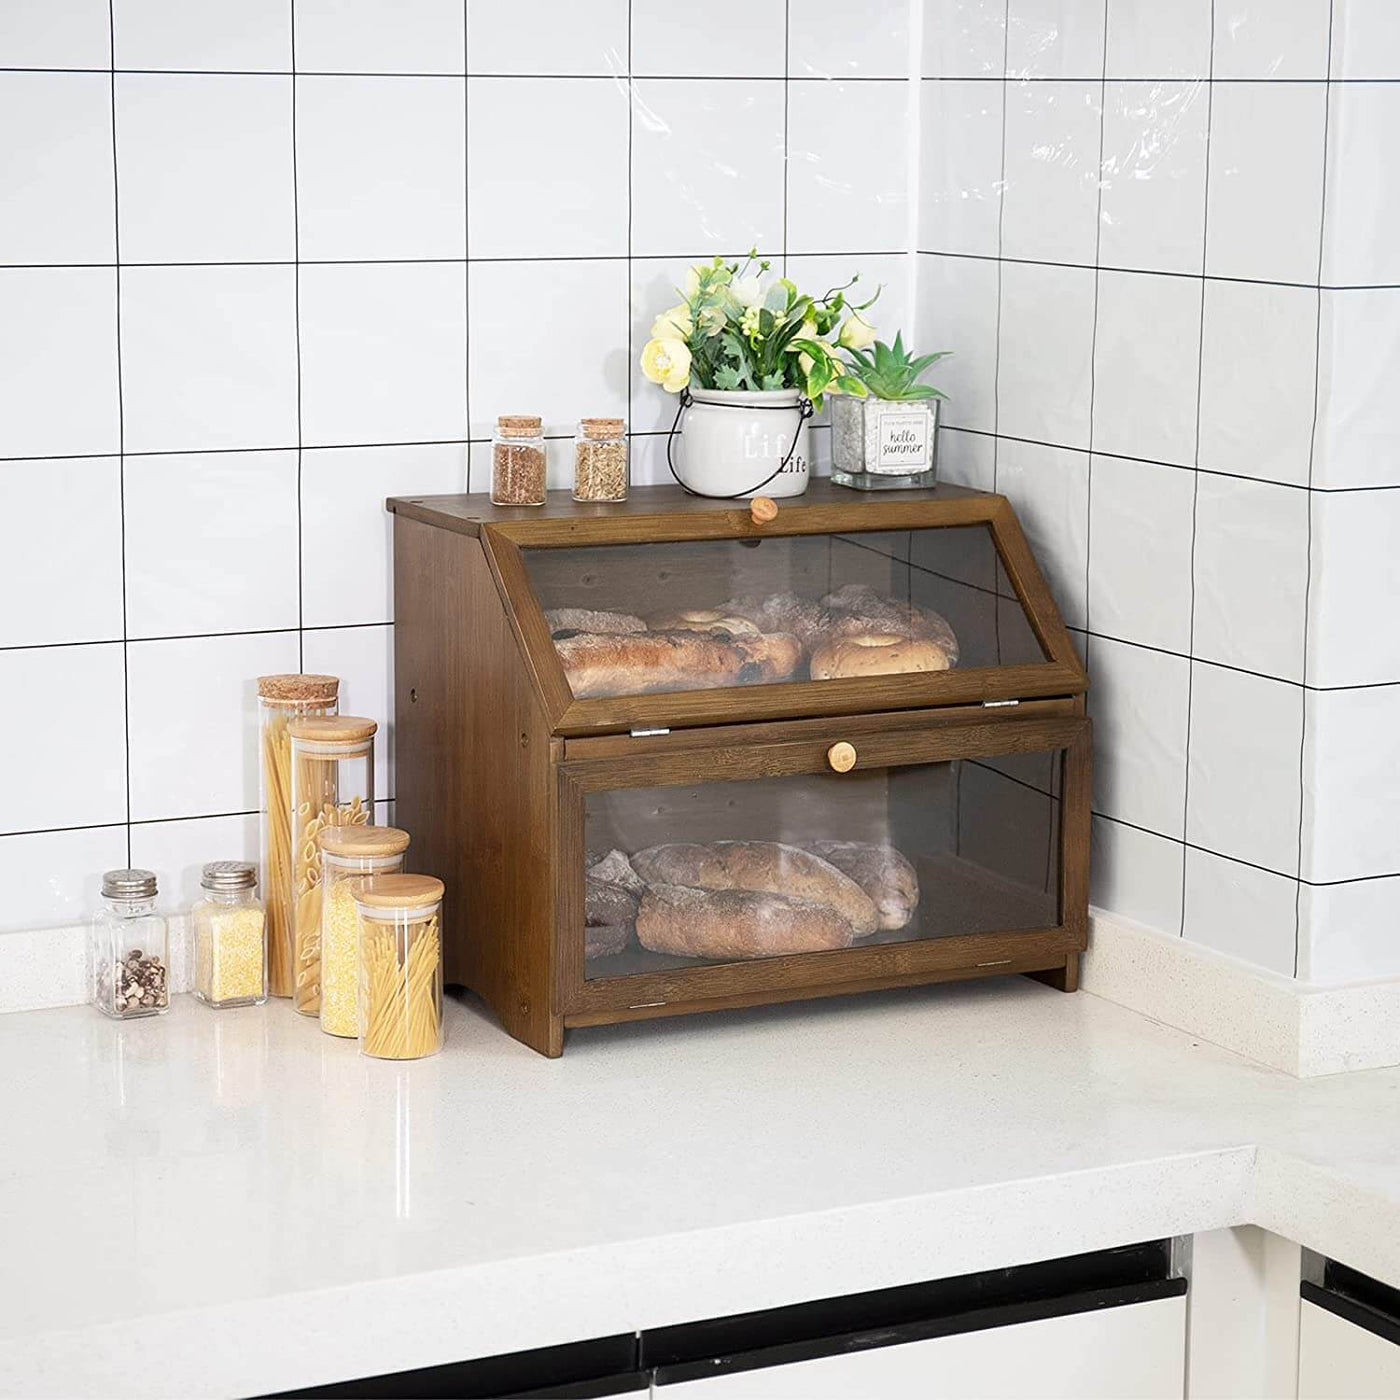 Homekoko HOMEKOKO Double Layer Large Bread Box for Kitchen Counter